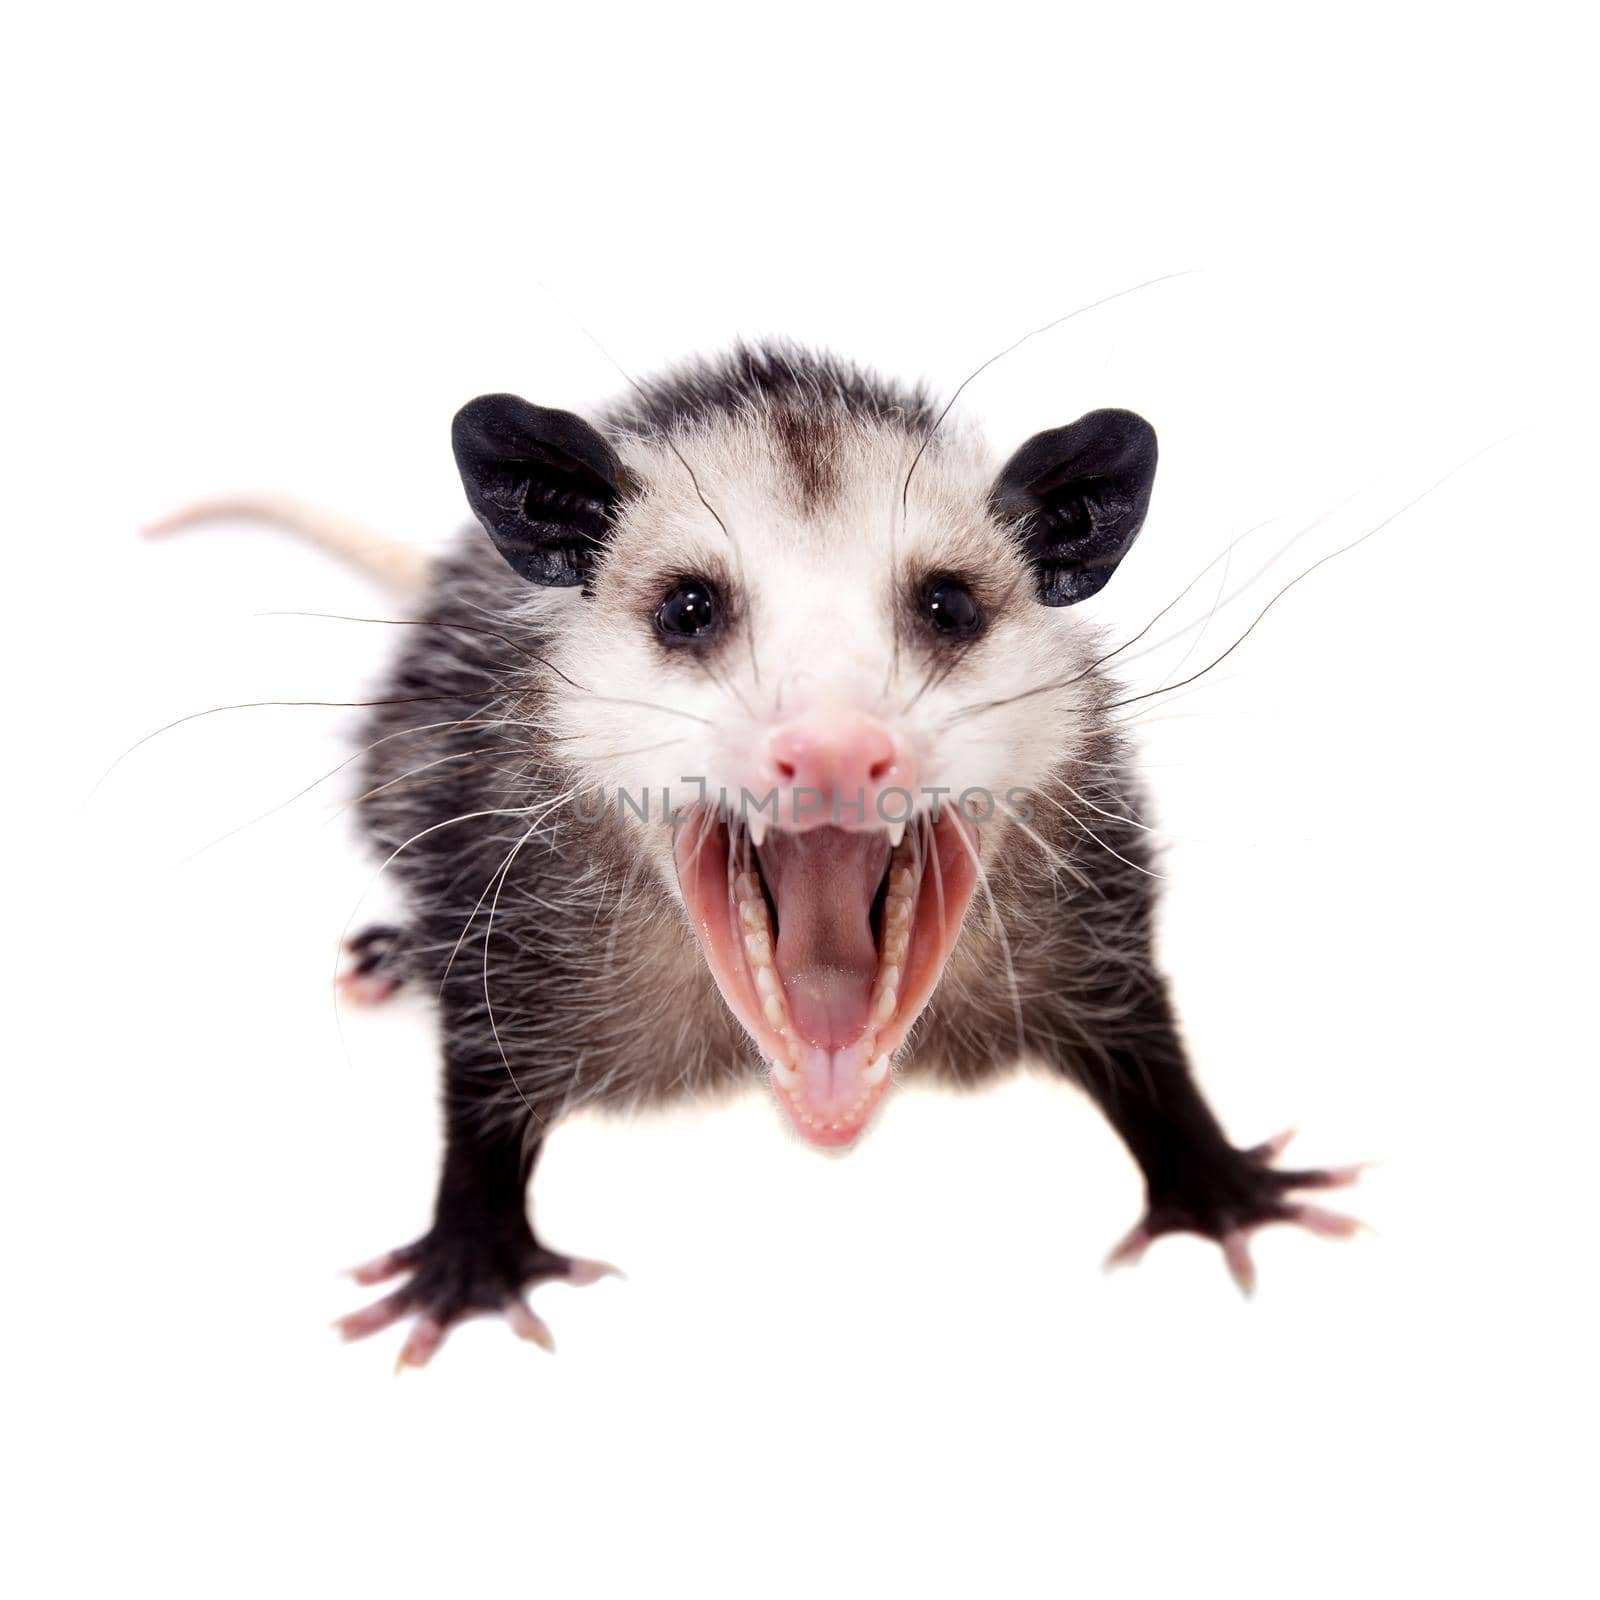 The Virginia opossum, Didelphis virginiana, on white by RosaJay